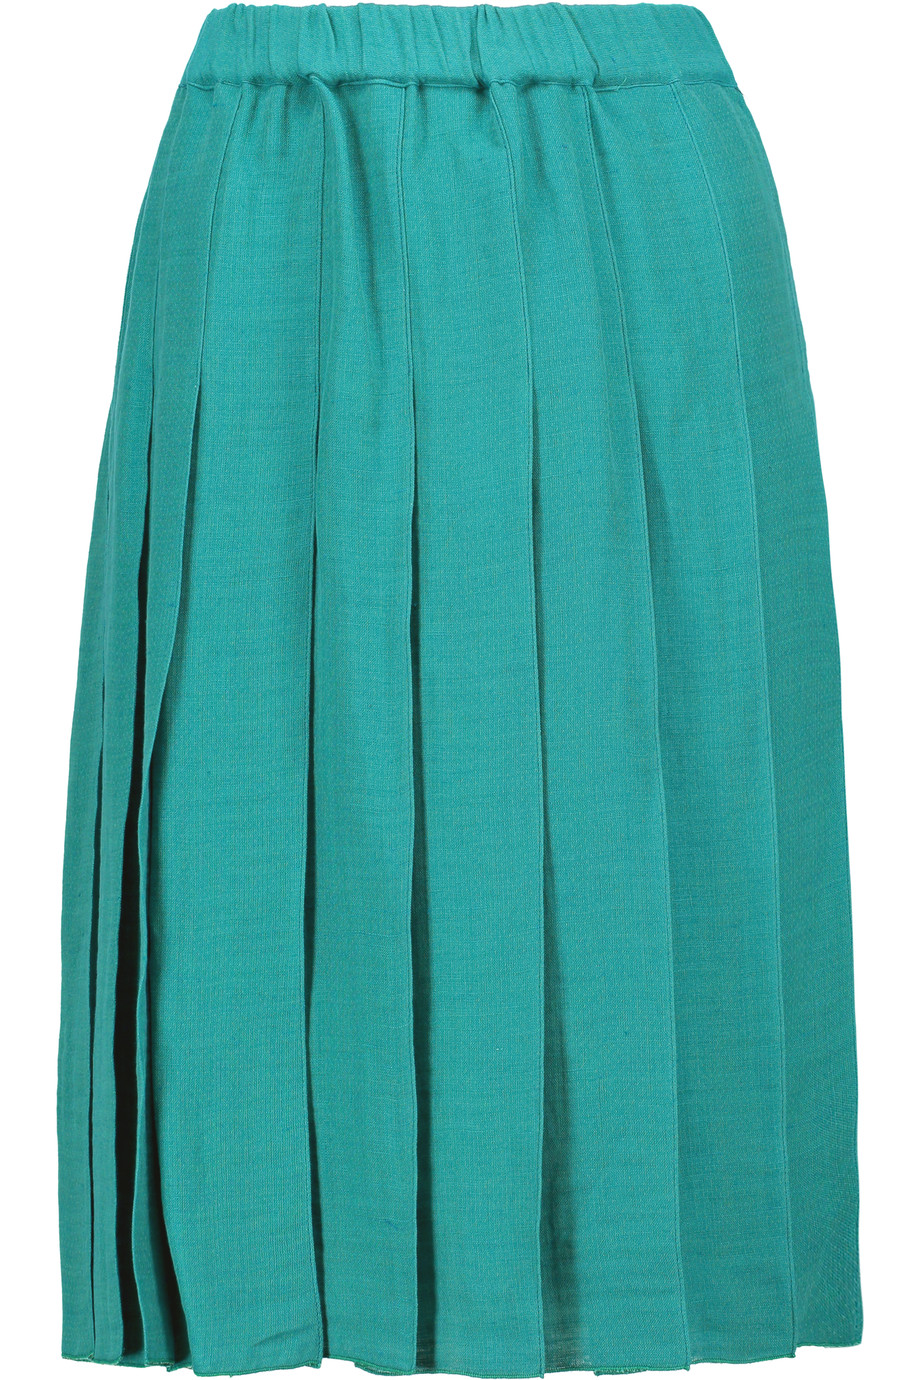 Marni Gonna Pleated Linen And Cotton-blend Skirt | ModeSens